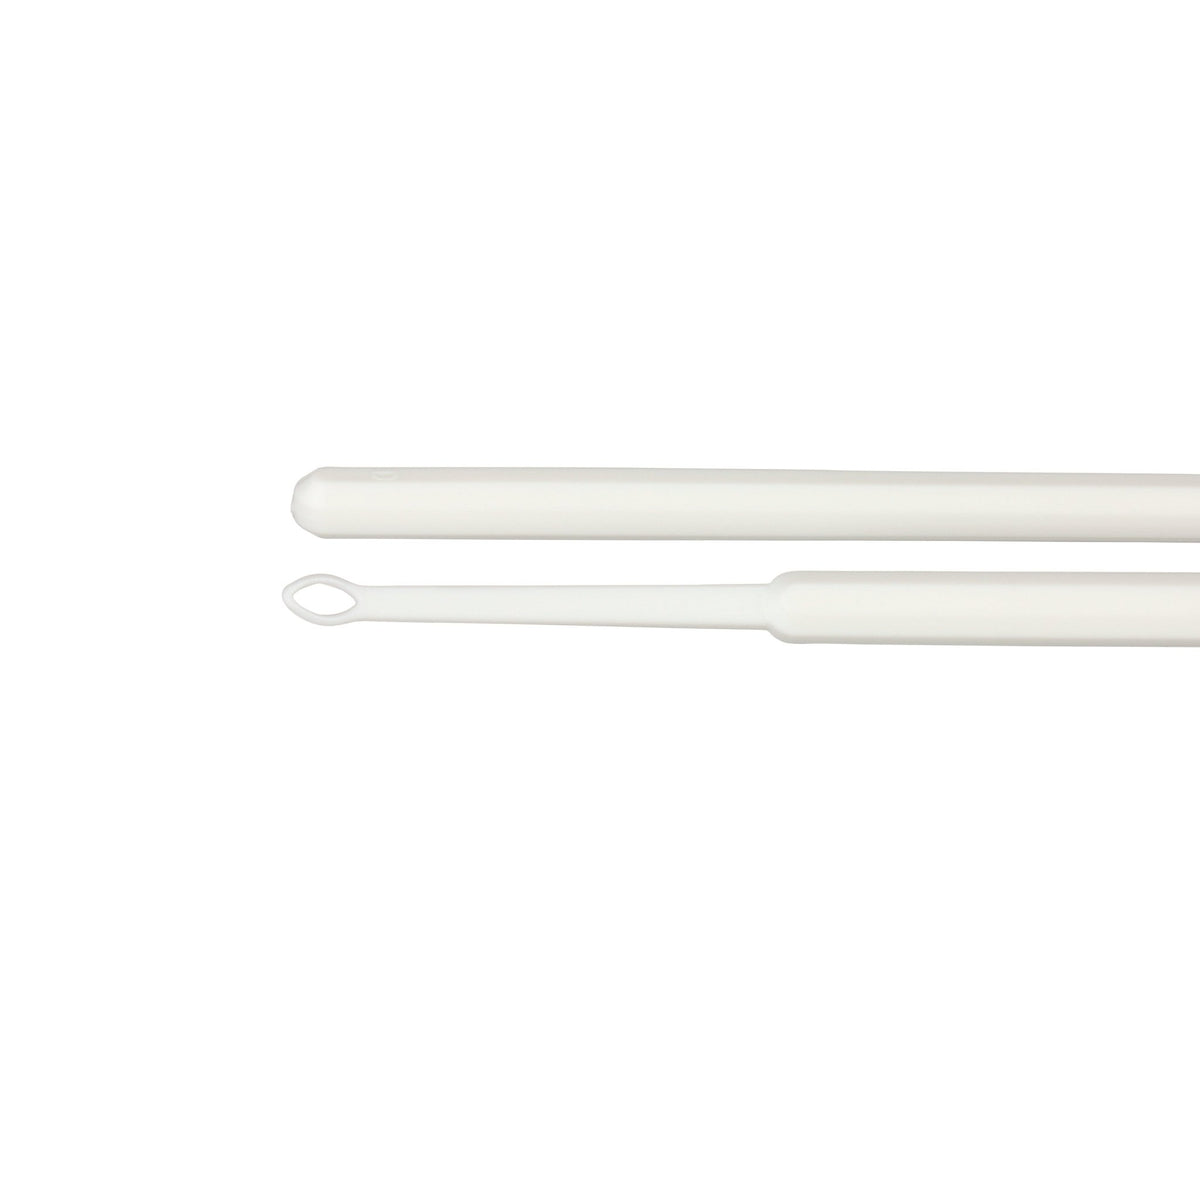 AHS Ear Curette, White, 4 mm Oval Tip, 50 ea/box - American Hospital Supply